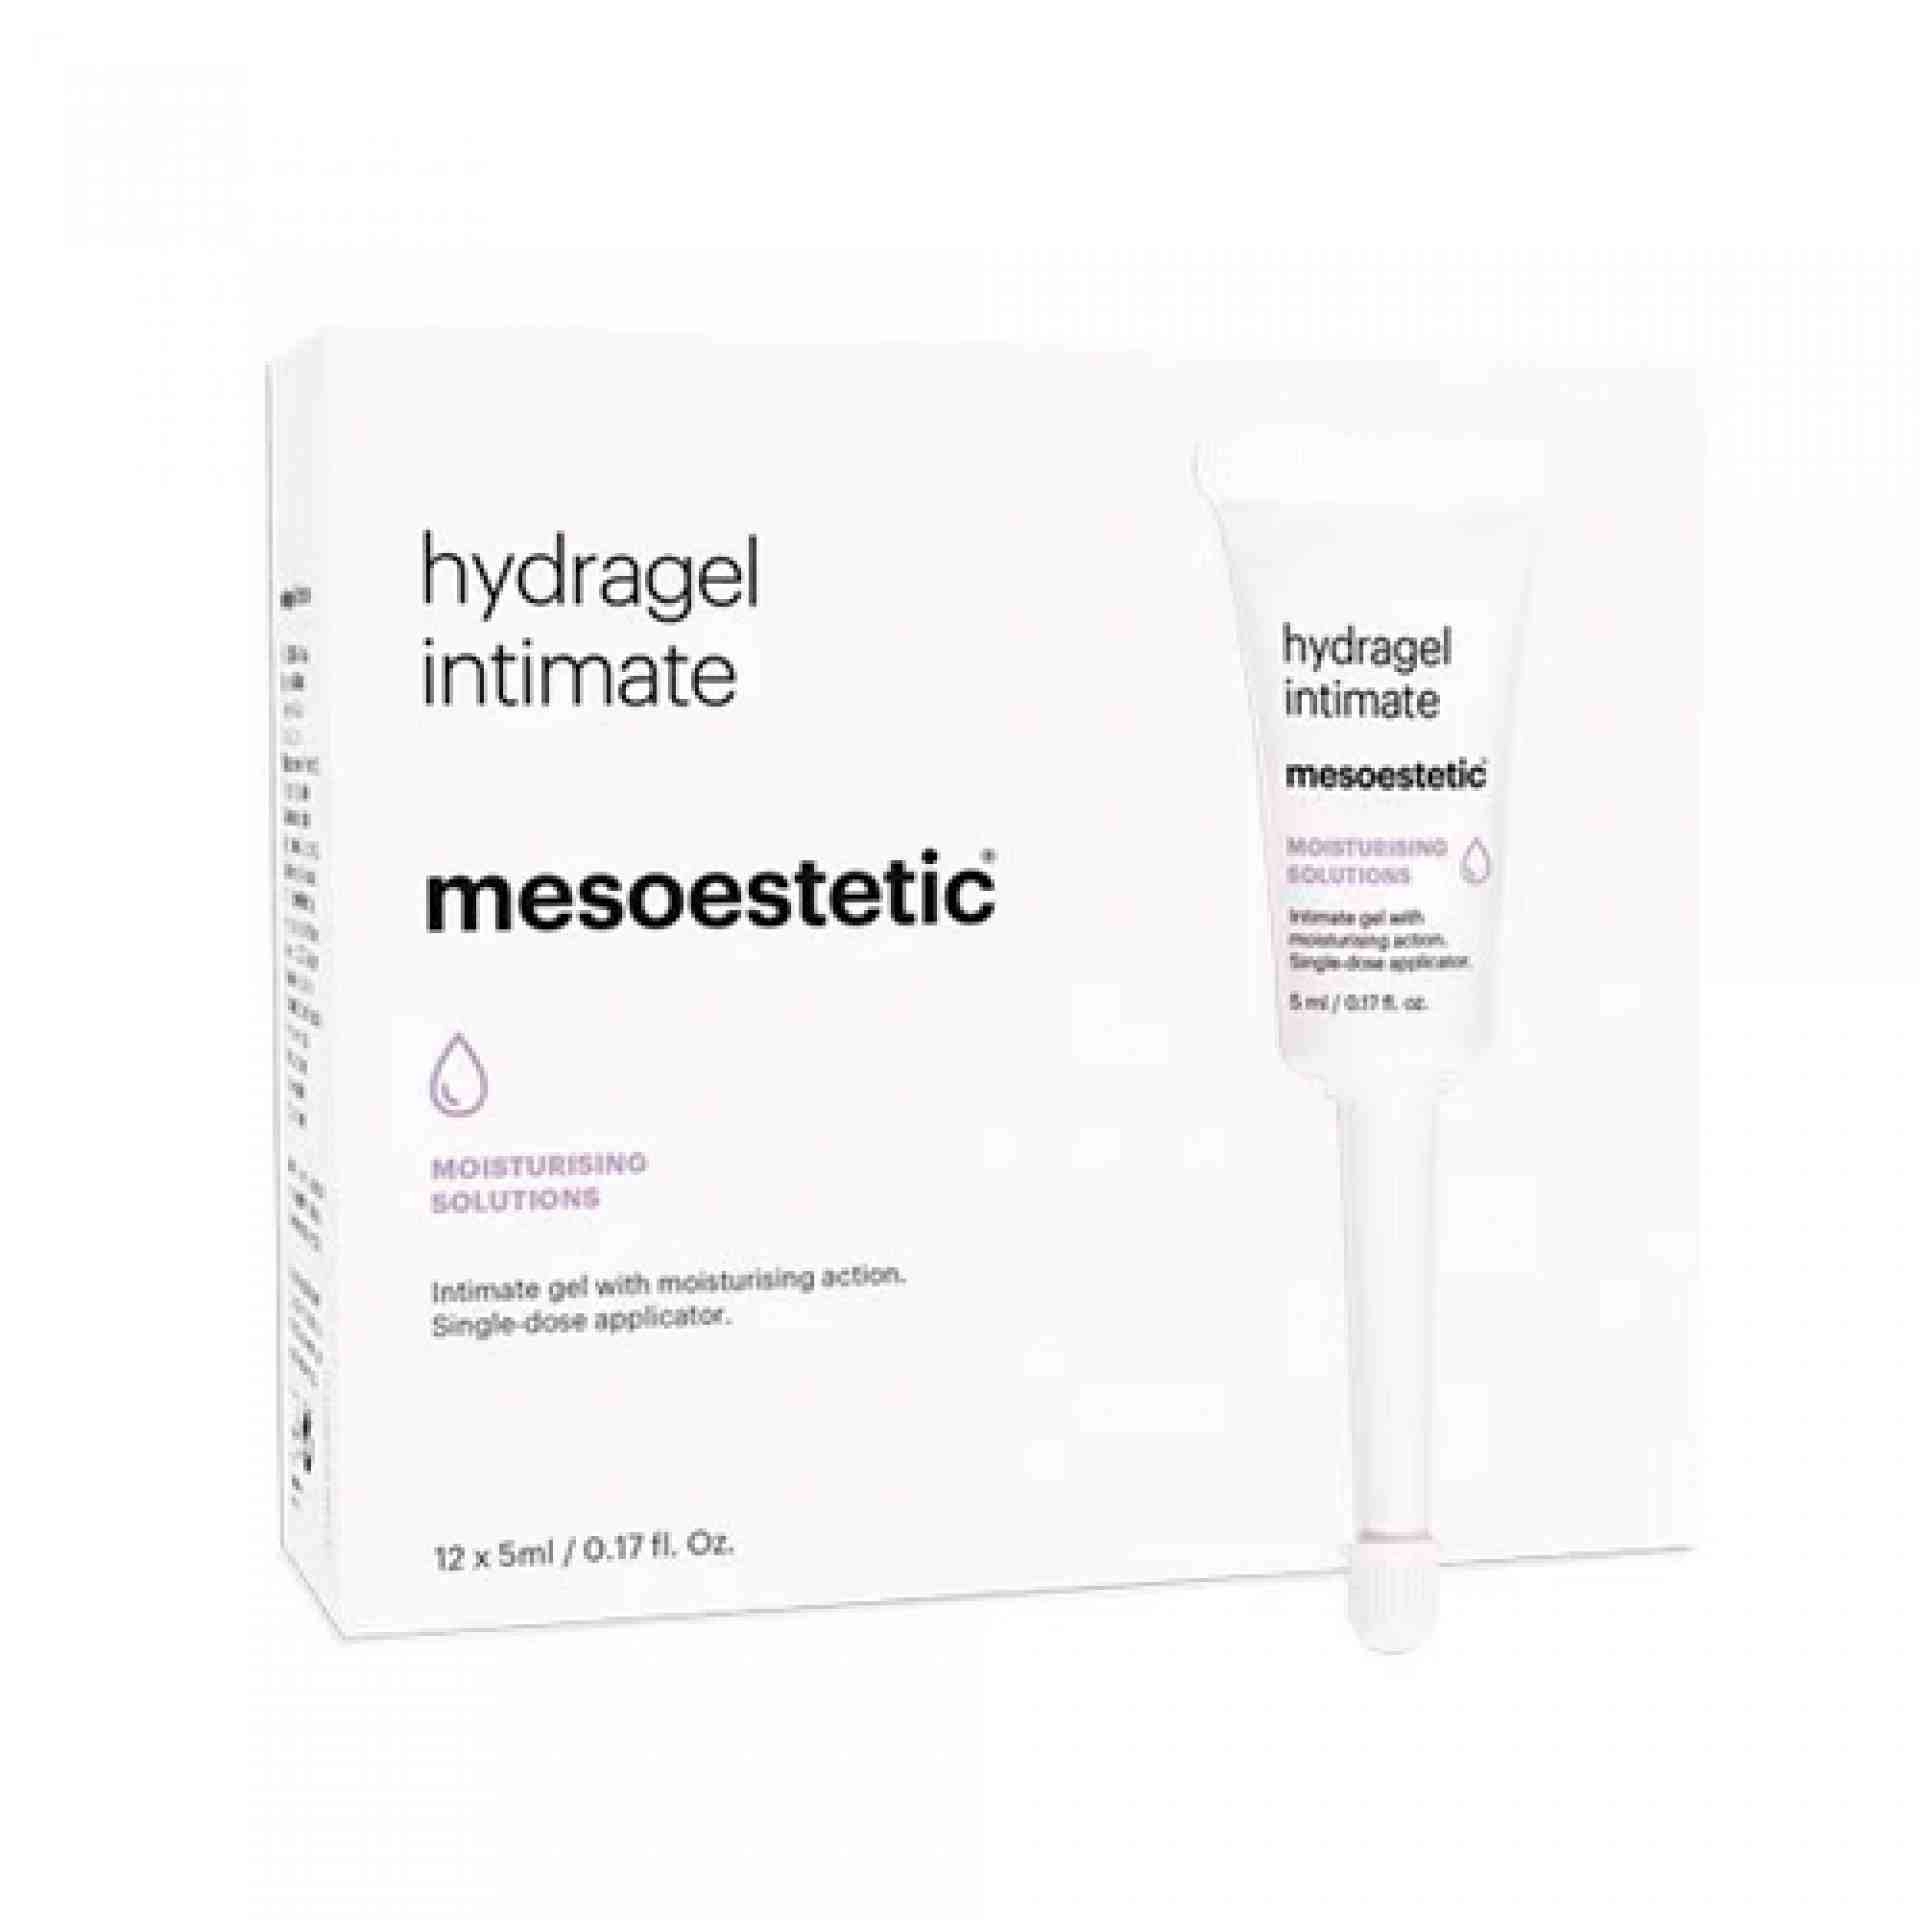 hydragel intimate | gel íntimo 12x5ml - moisturising solutions - mesoestetic ®